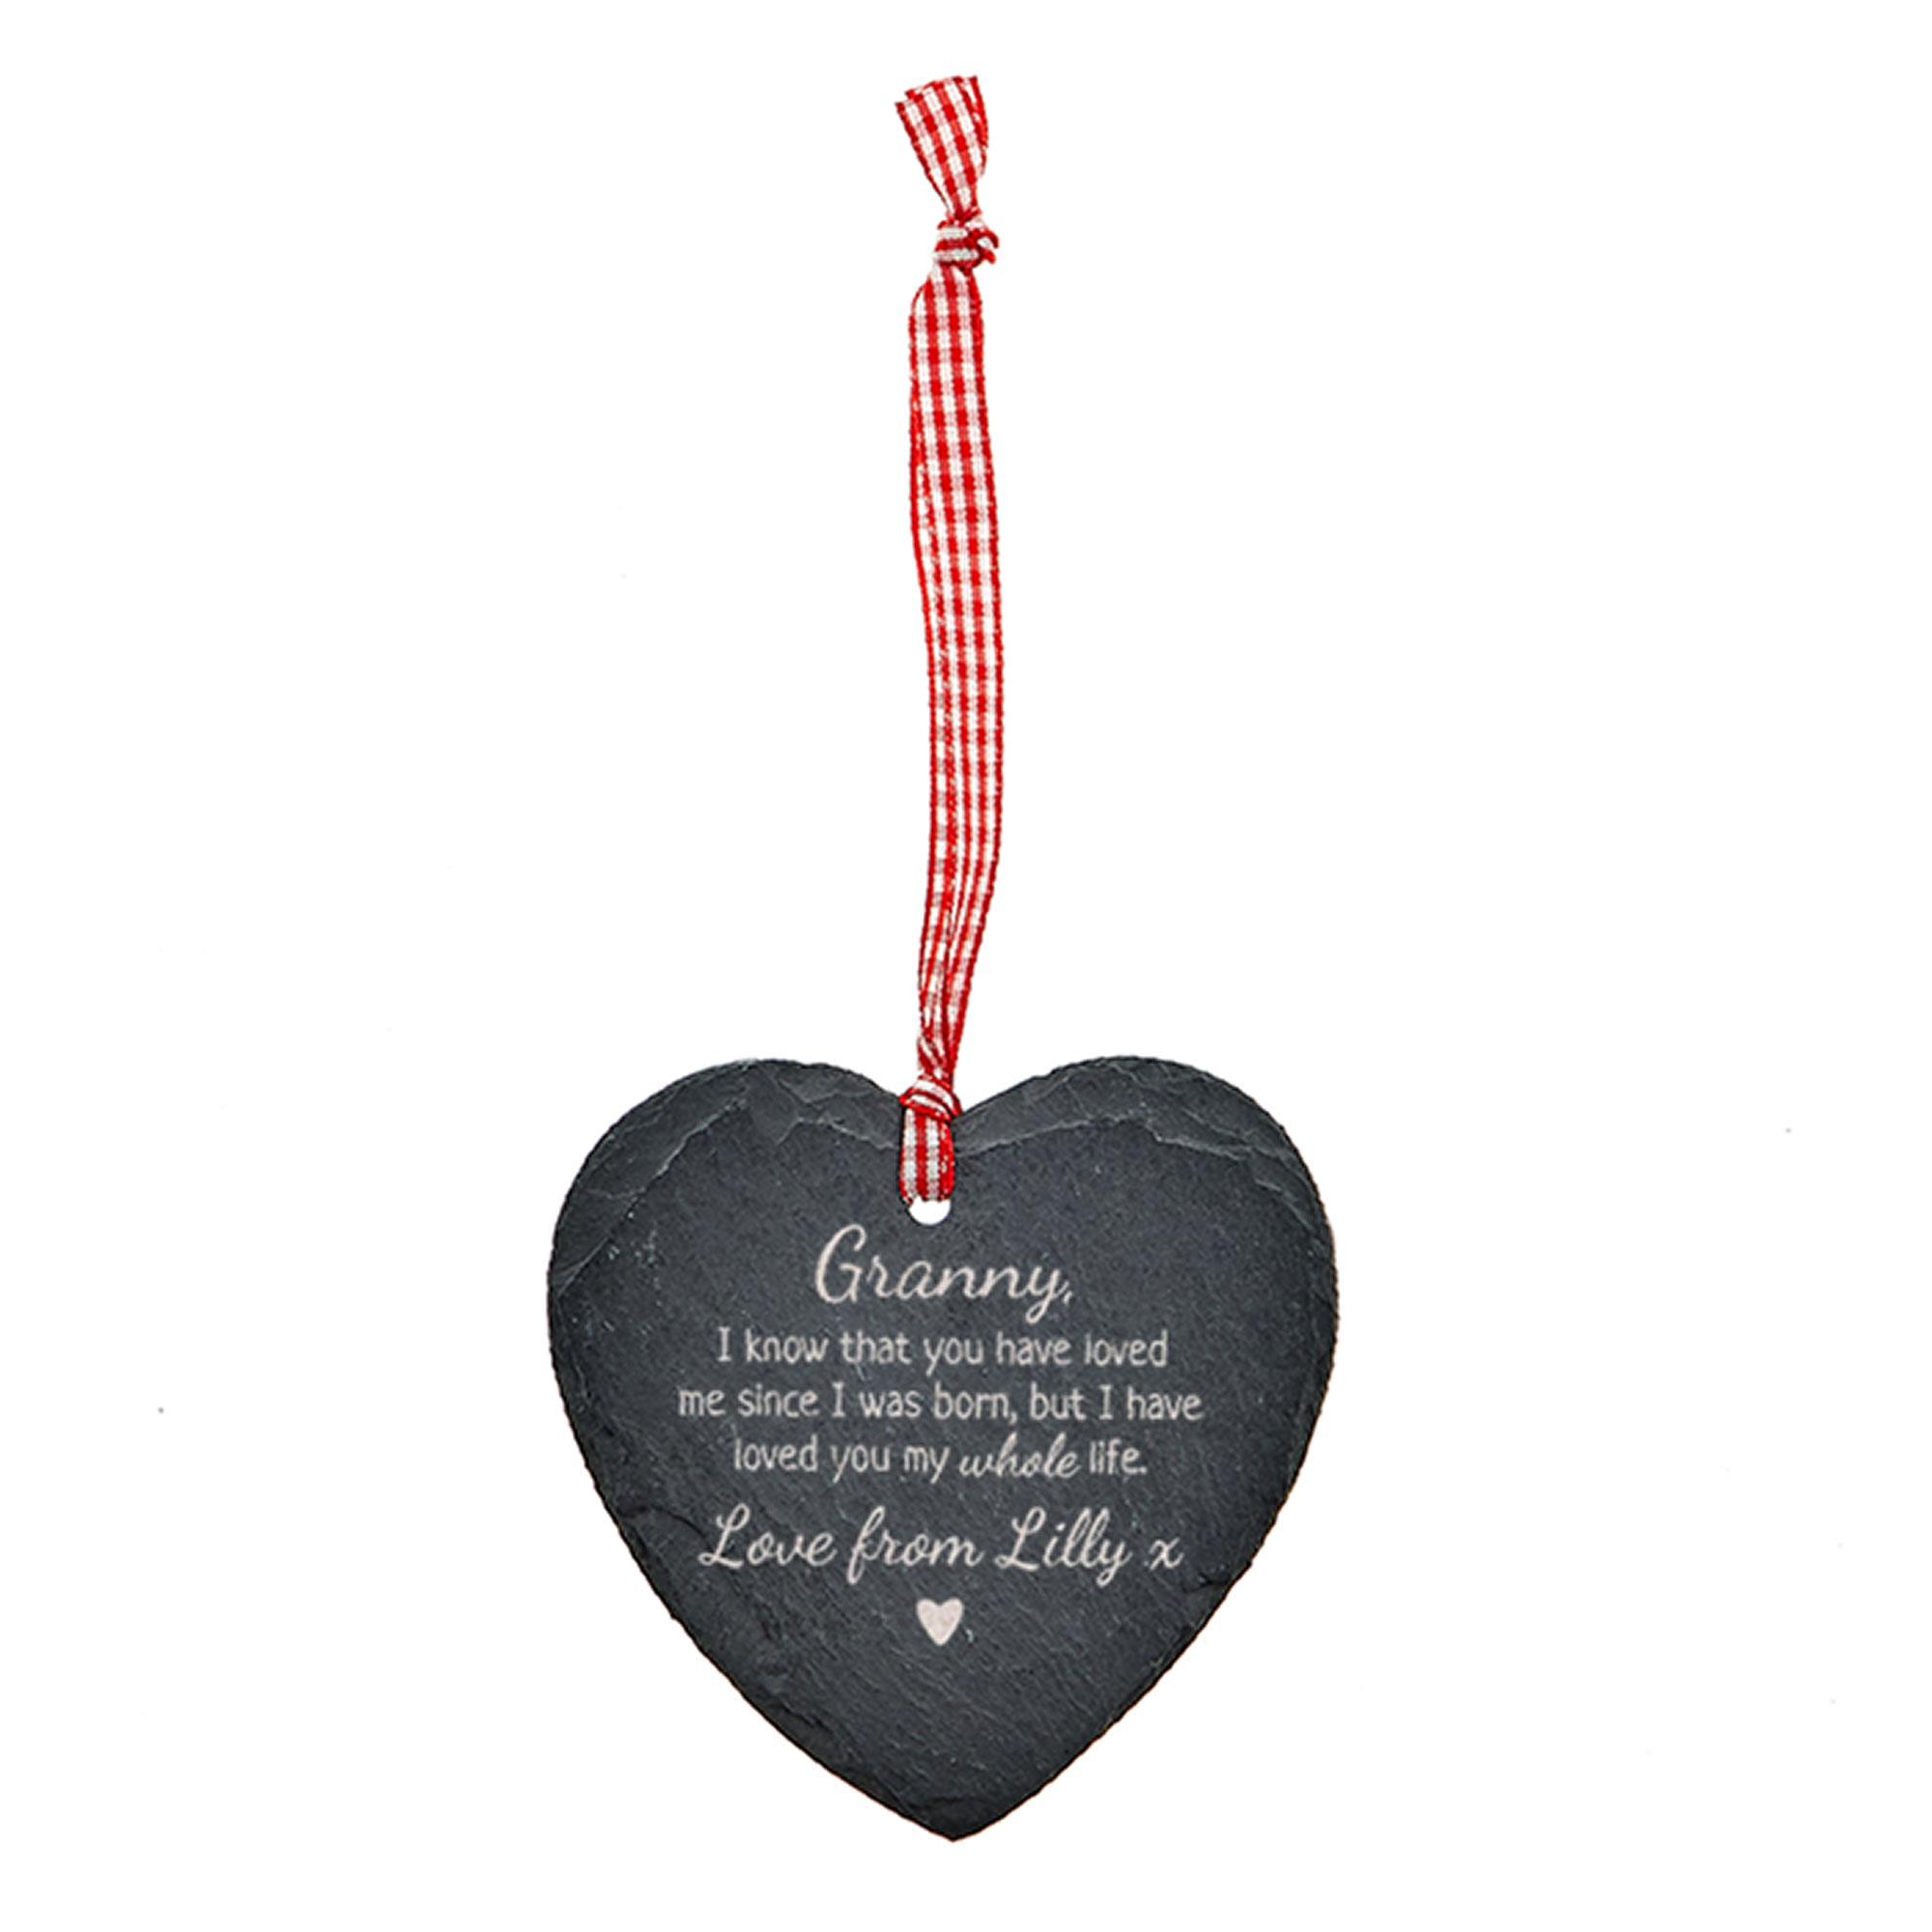 Personalised Engraved Heart-Shaped Slate Hanging Keepsake - Loved You My Whole Life